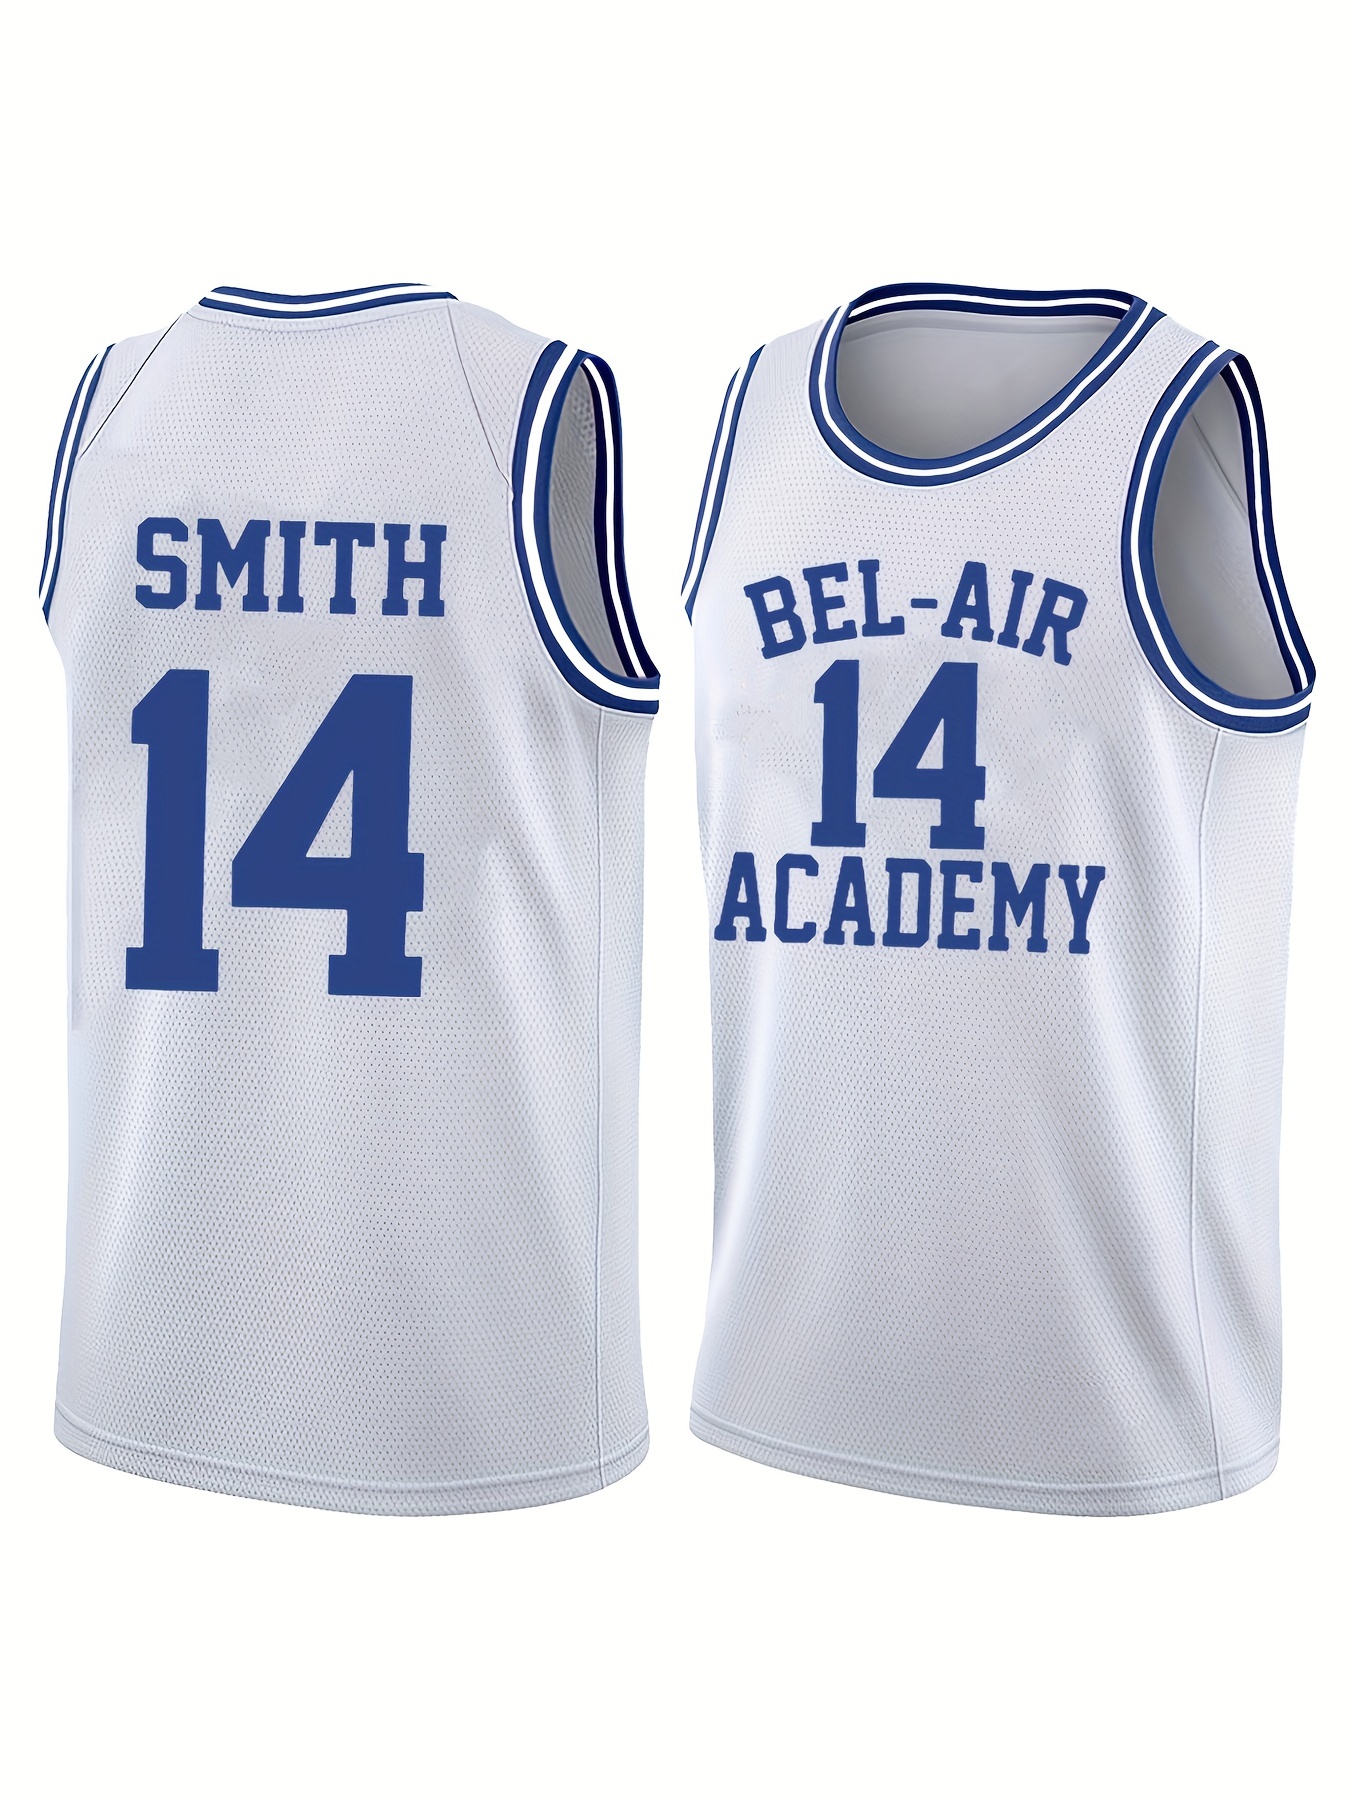 Basketball Jerseys shorts BEL-AIR ACADEMY 14 SMITH Sewing